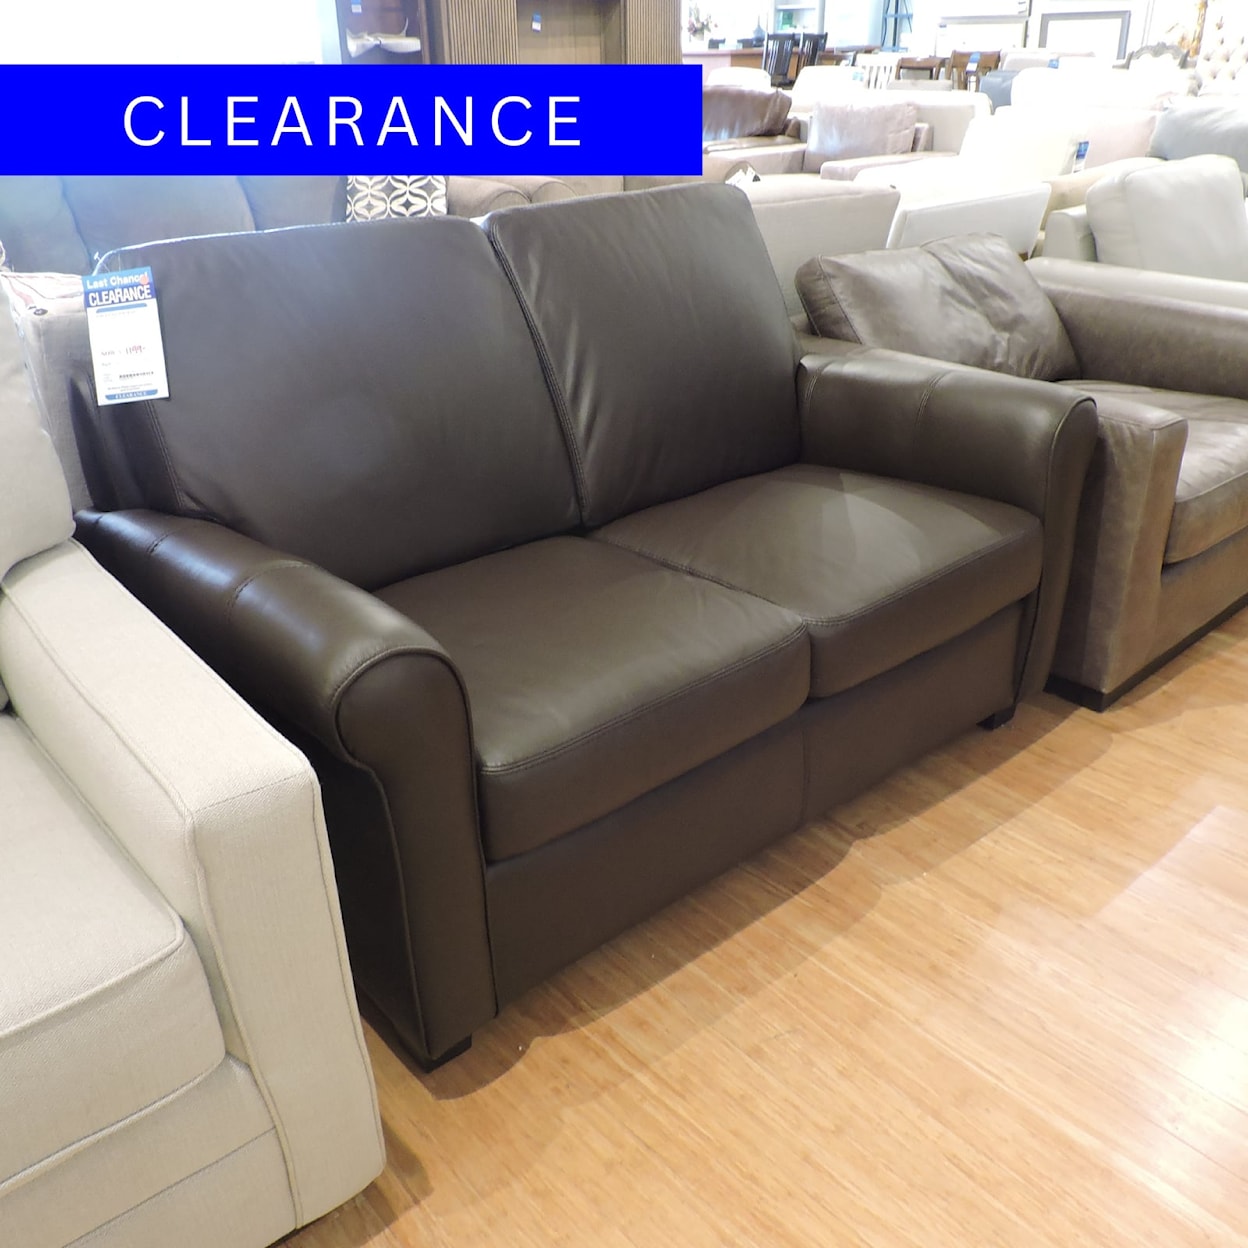 Miscellaneous Clearance 2 Seat Leather Sofa